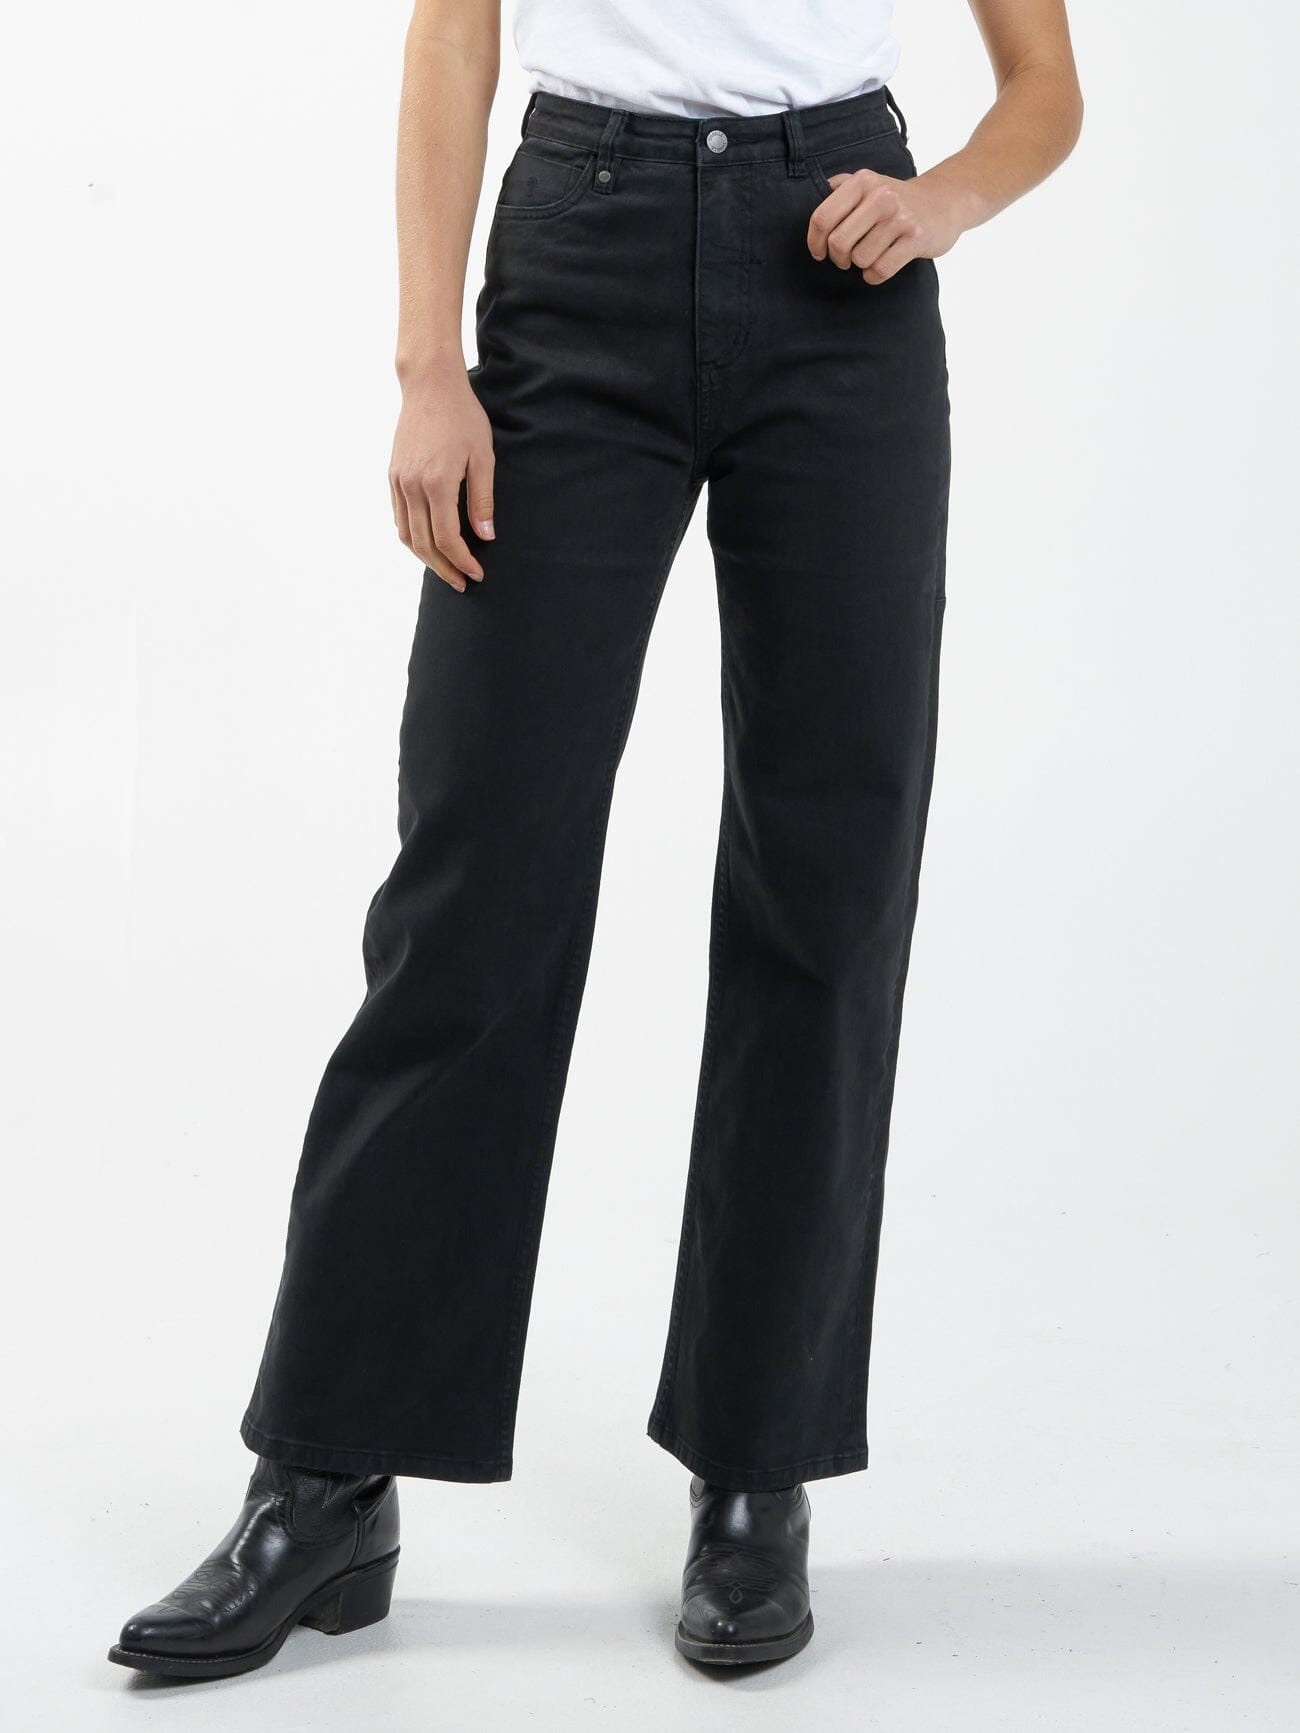 Aggregate 166+ grey jeans womens australia